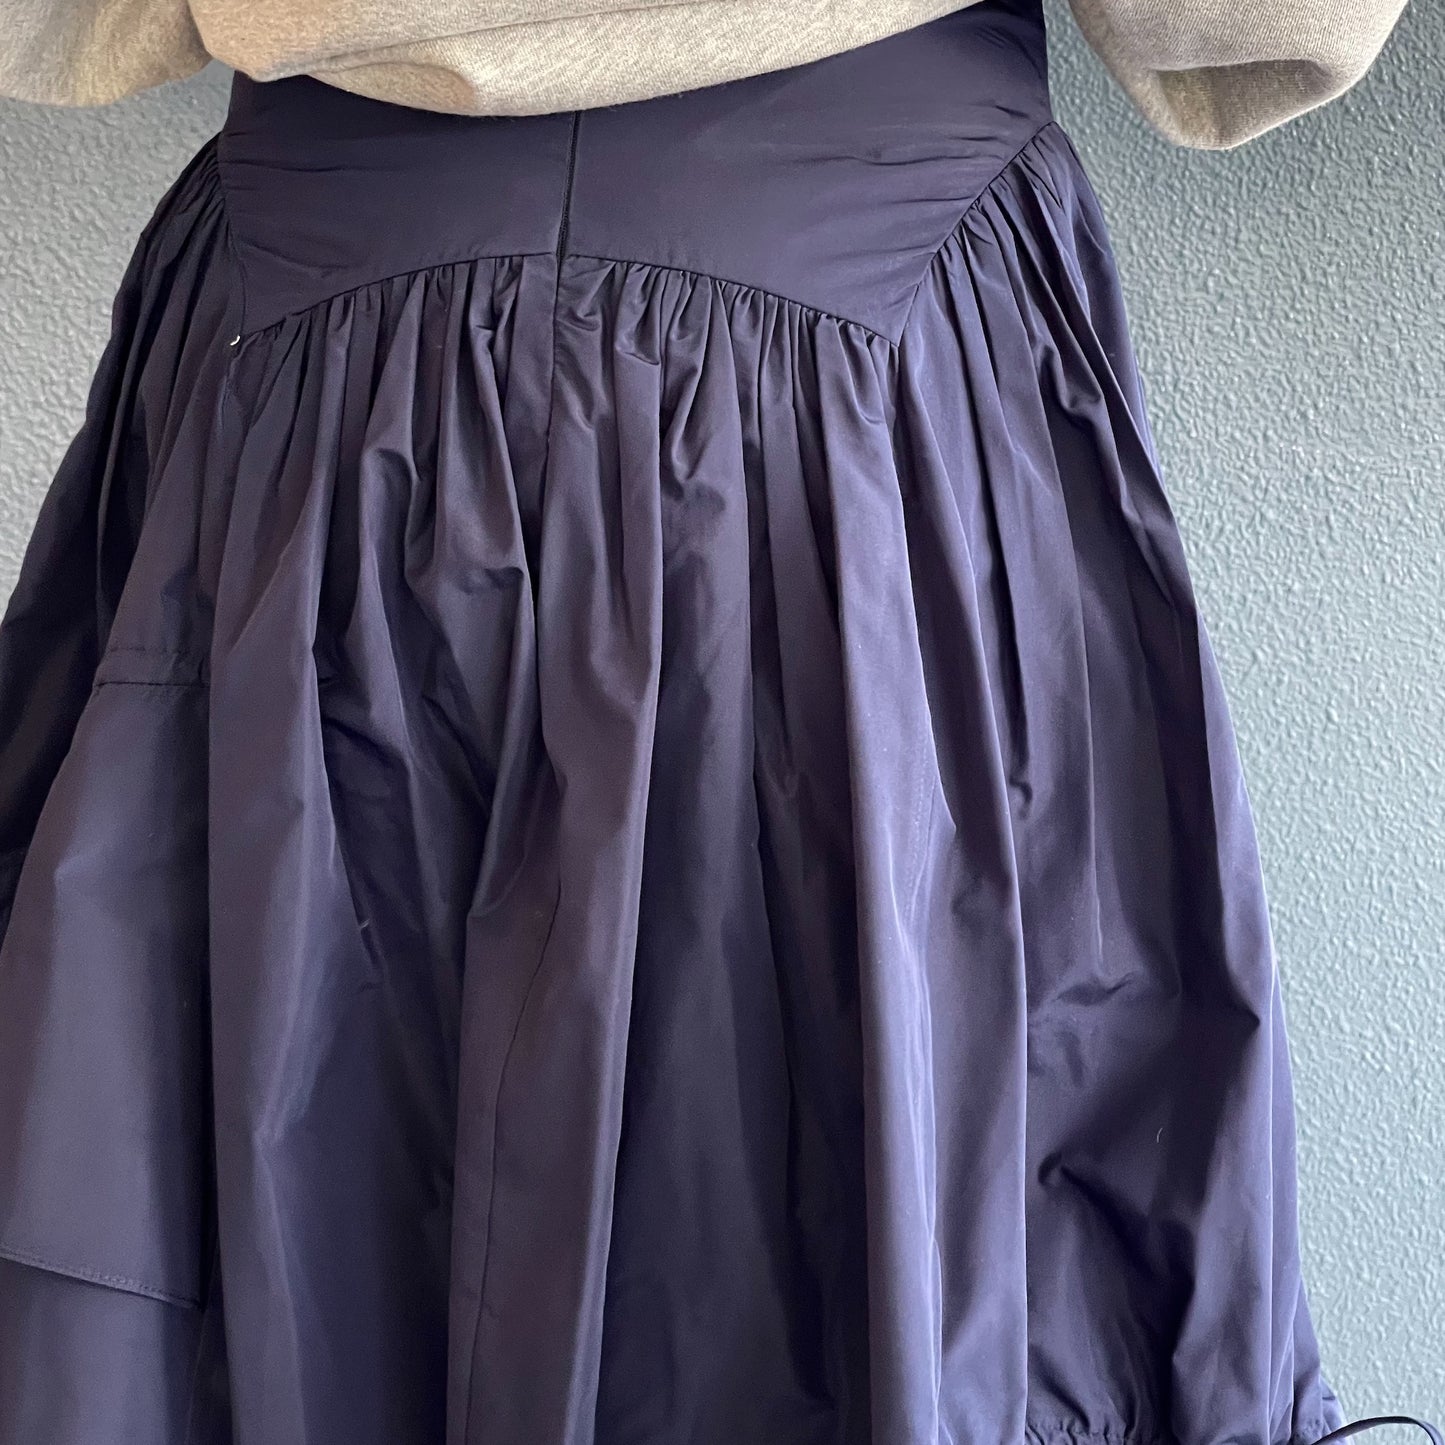 Blanche skirt / Navy / ギャザースカート